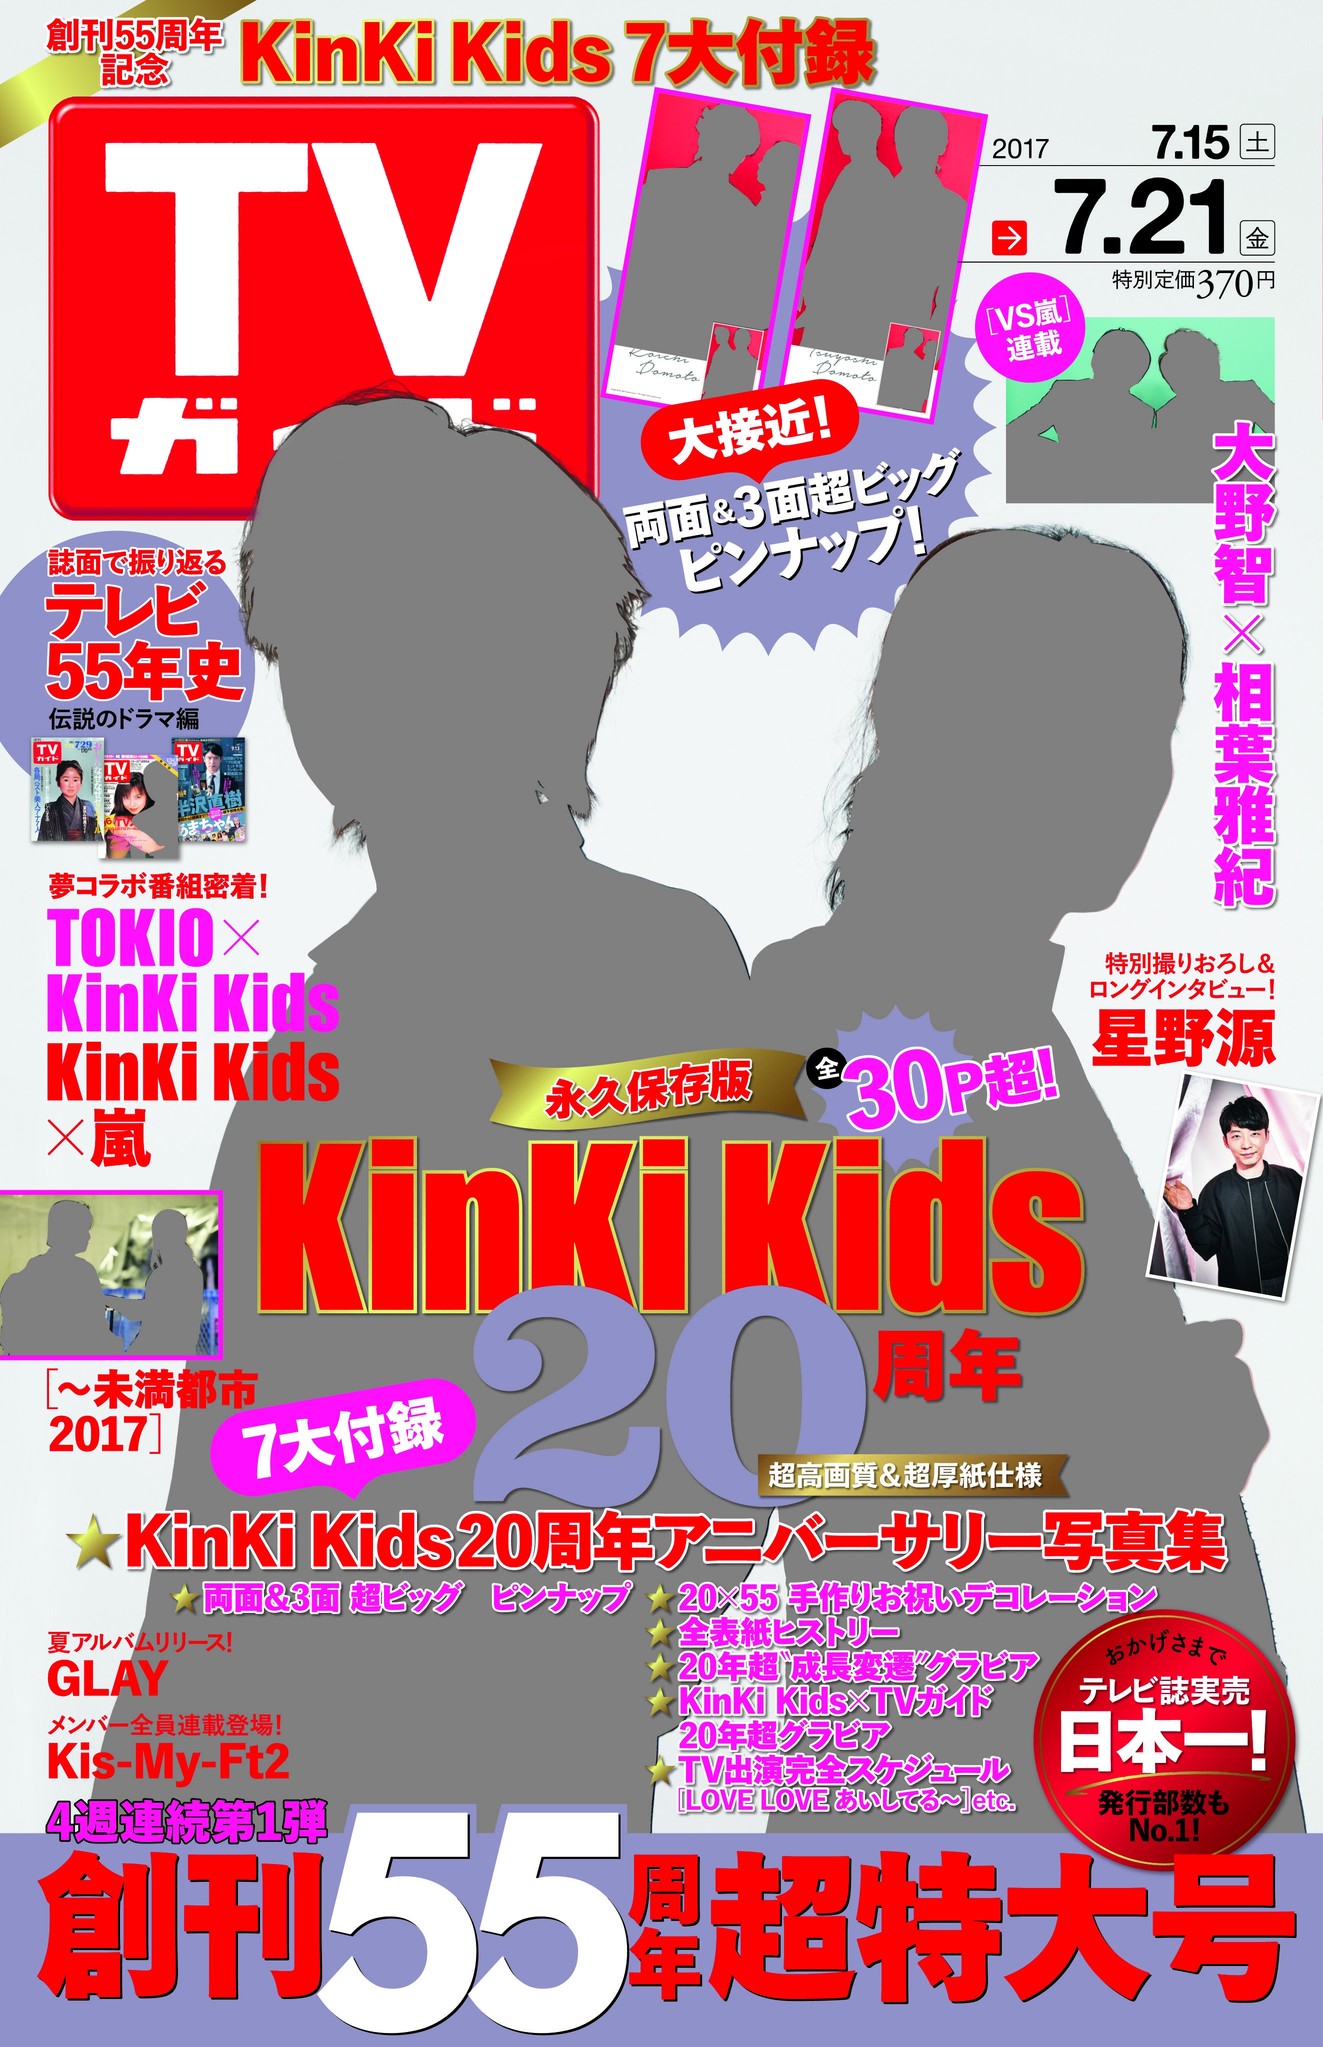 Kinki Kidsがtvガイドと歩んだ年を赤裸々に告白 記憶に残ってるのは 雑誌の数が多すぎる 堂本光一 30代後半だし 光一と目を合わせる 世界観の写真はもうええんちゃうかな 堂本剛 株式会社東京ニュース通信社のプレスリリース